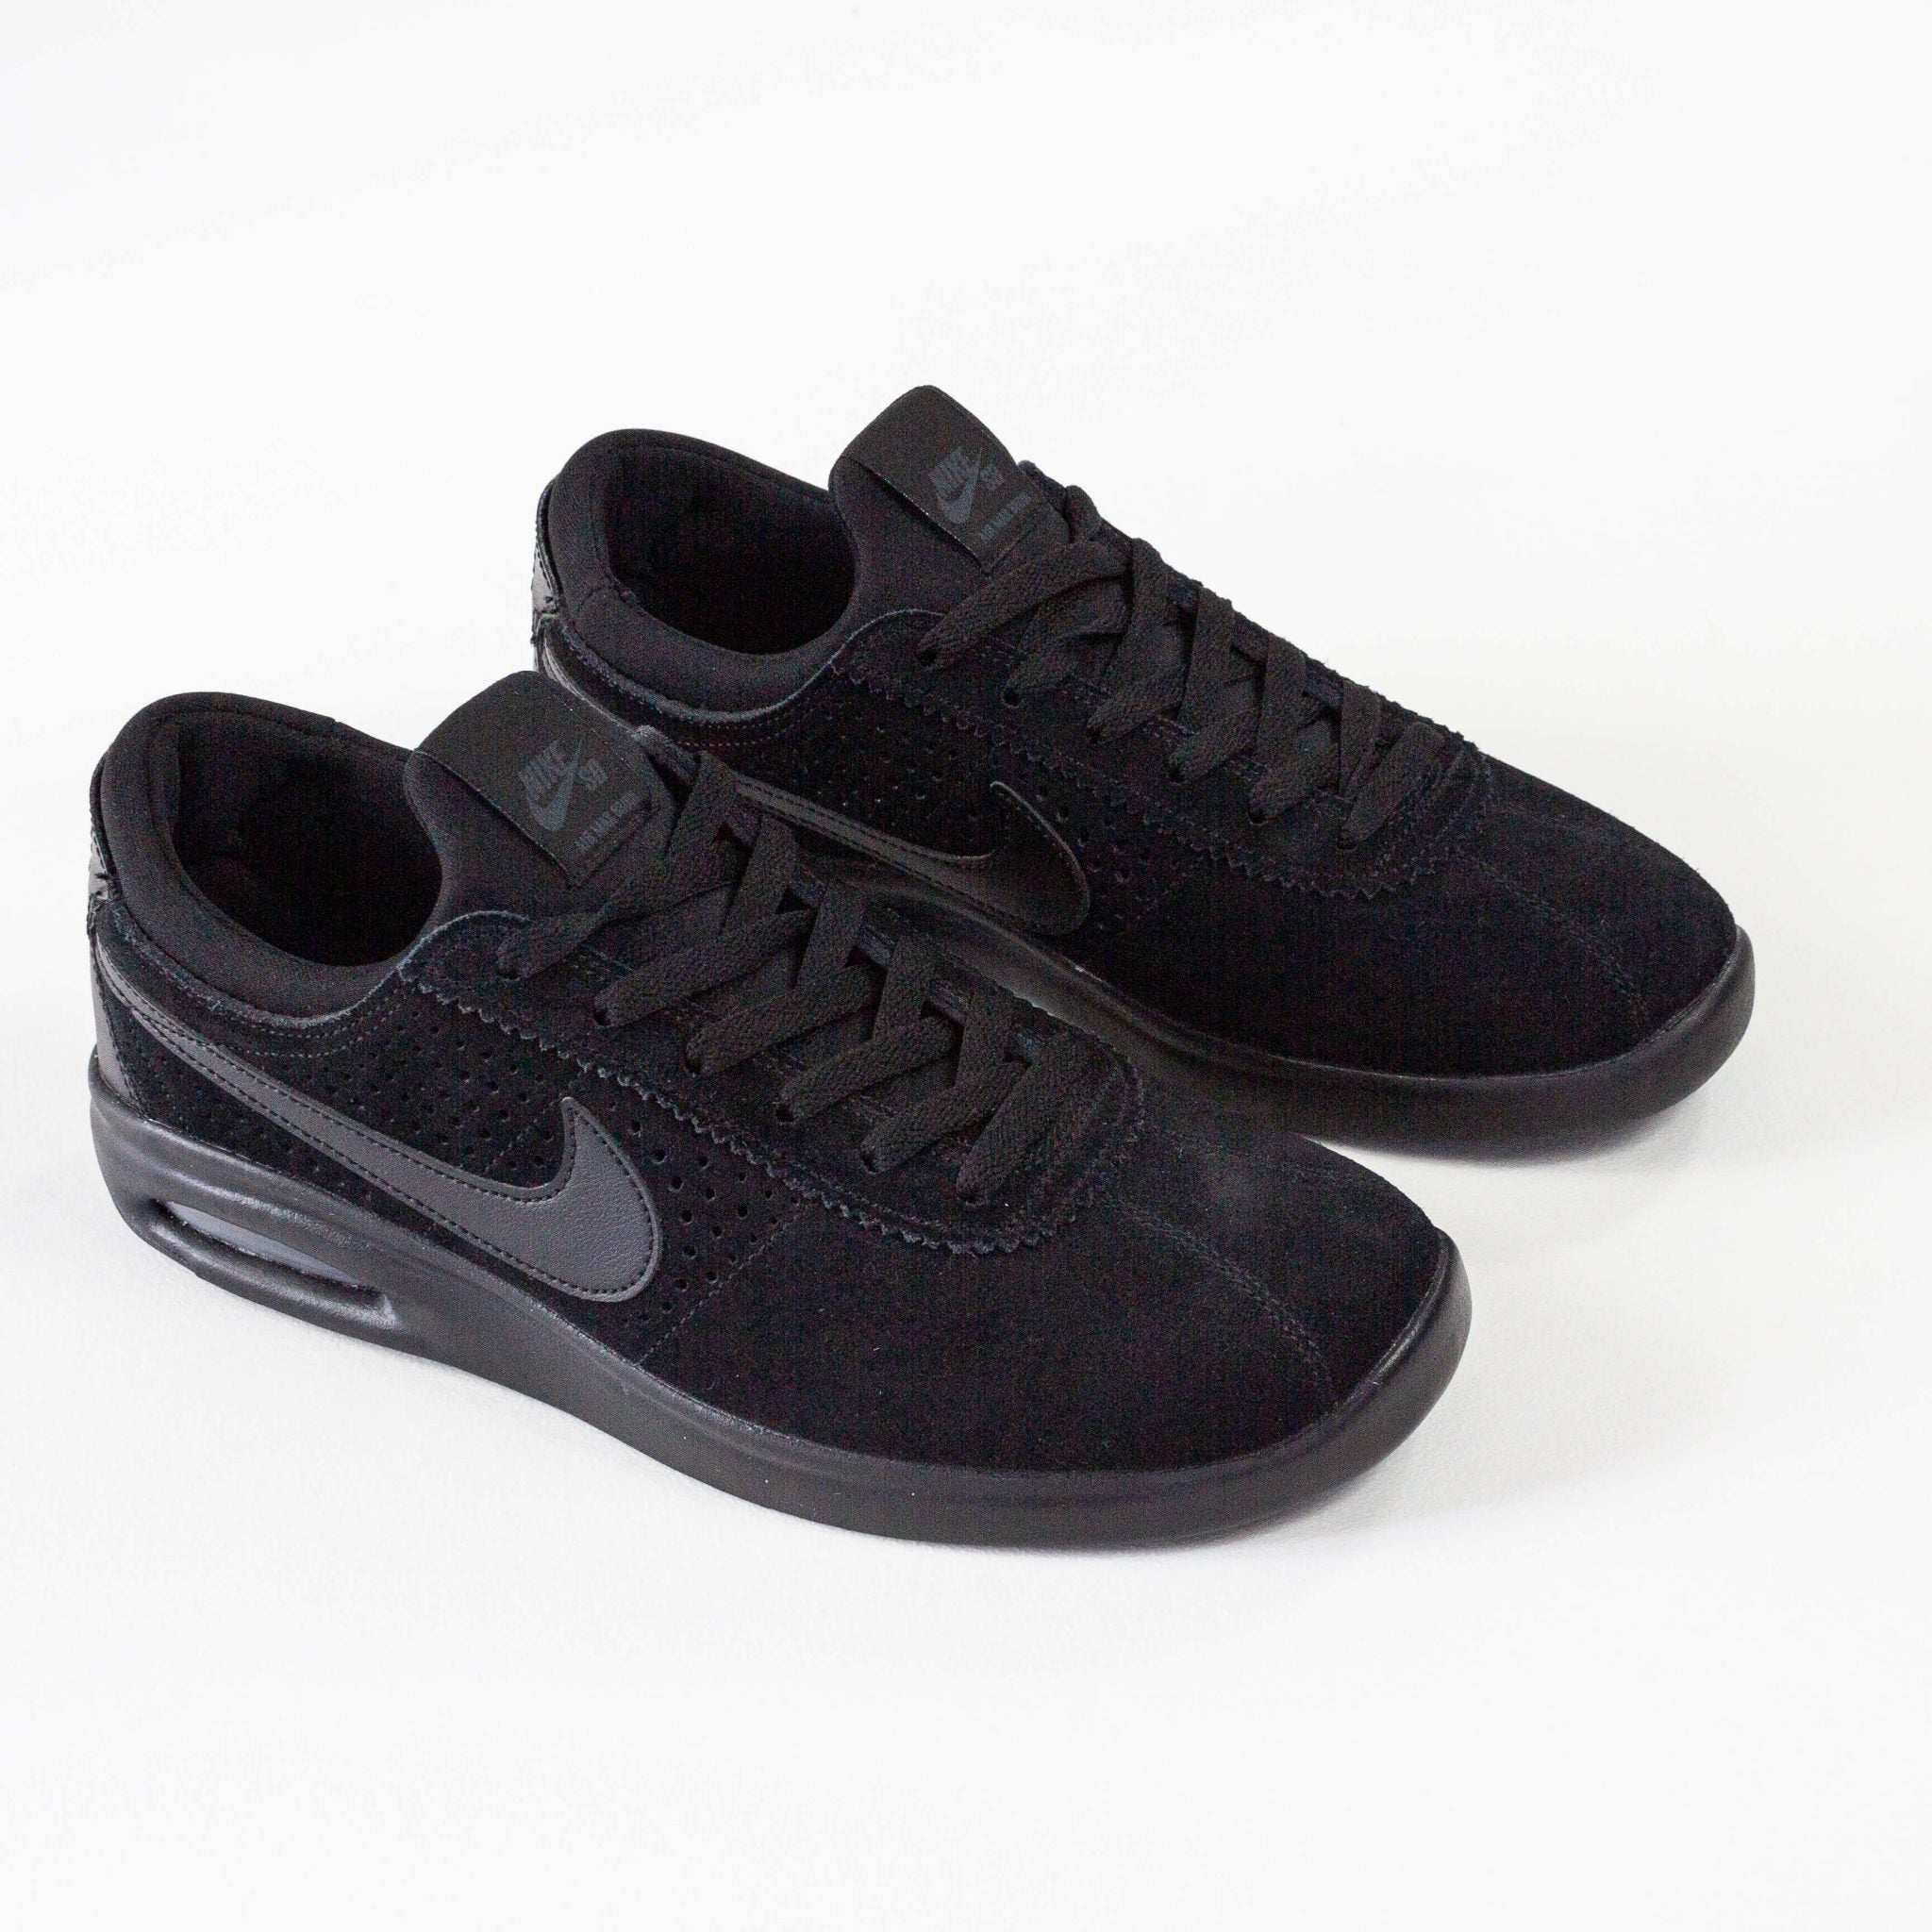 Nike SB Air Max Bruin Vapor Shoes - Black / Anthracite (003) – Casuals